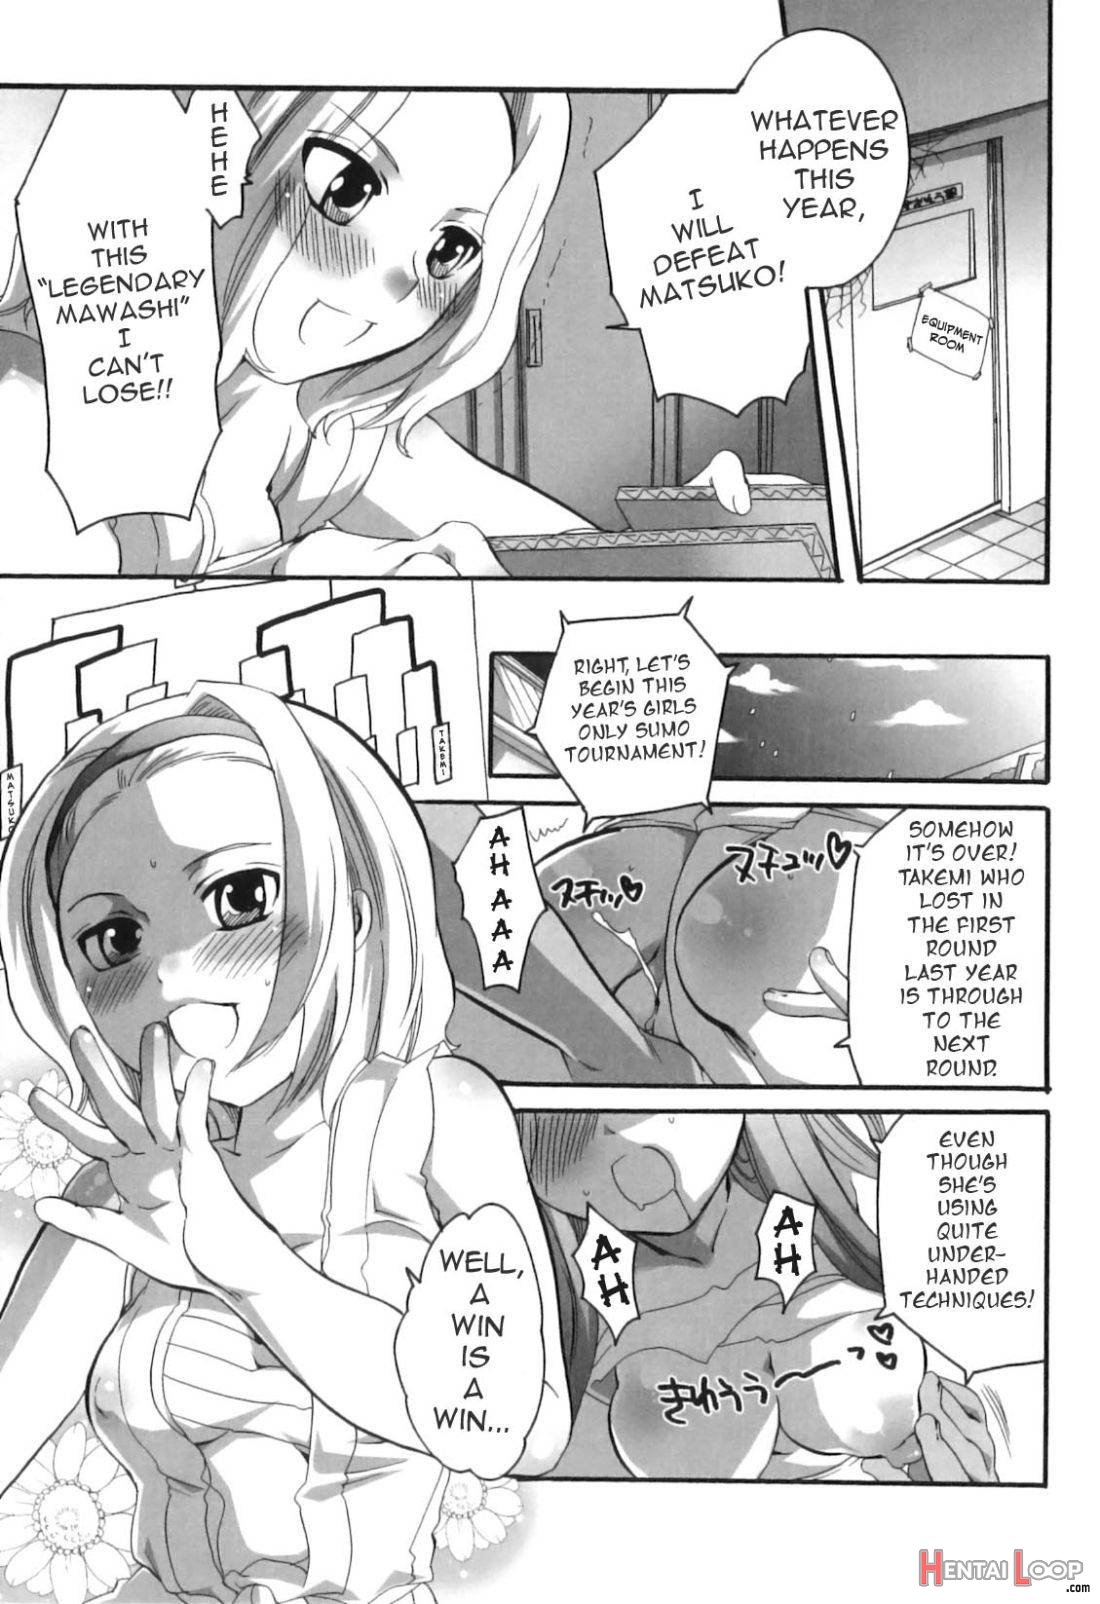 The Legendary Mawashi page 7